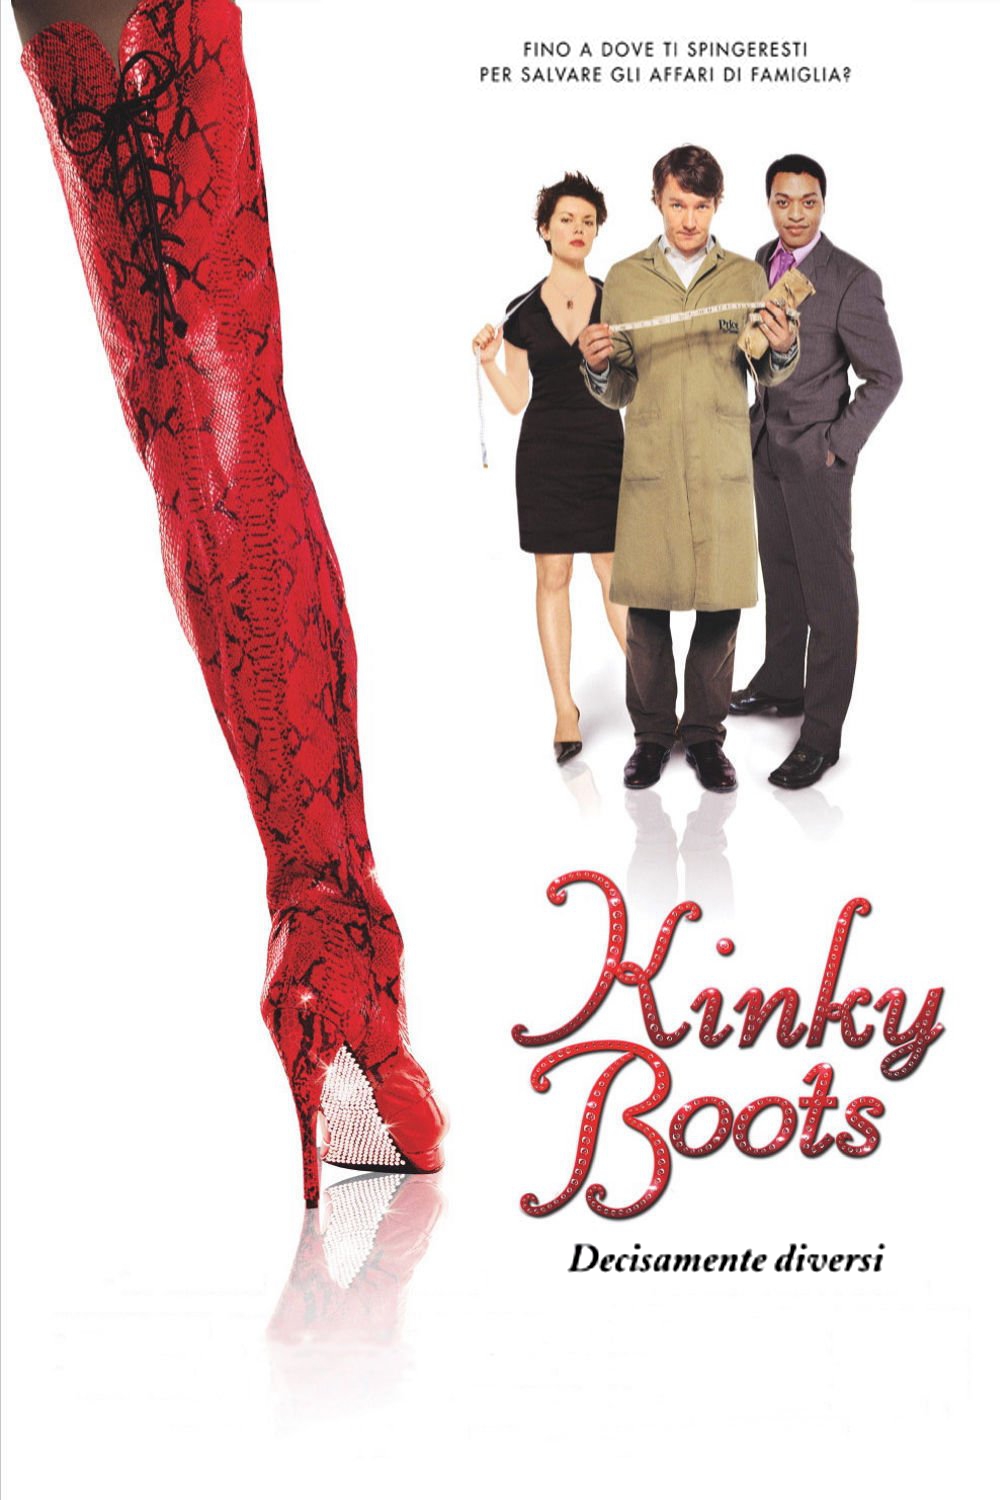 Kinky Boots – Decisamente diversi [HD] (2005)